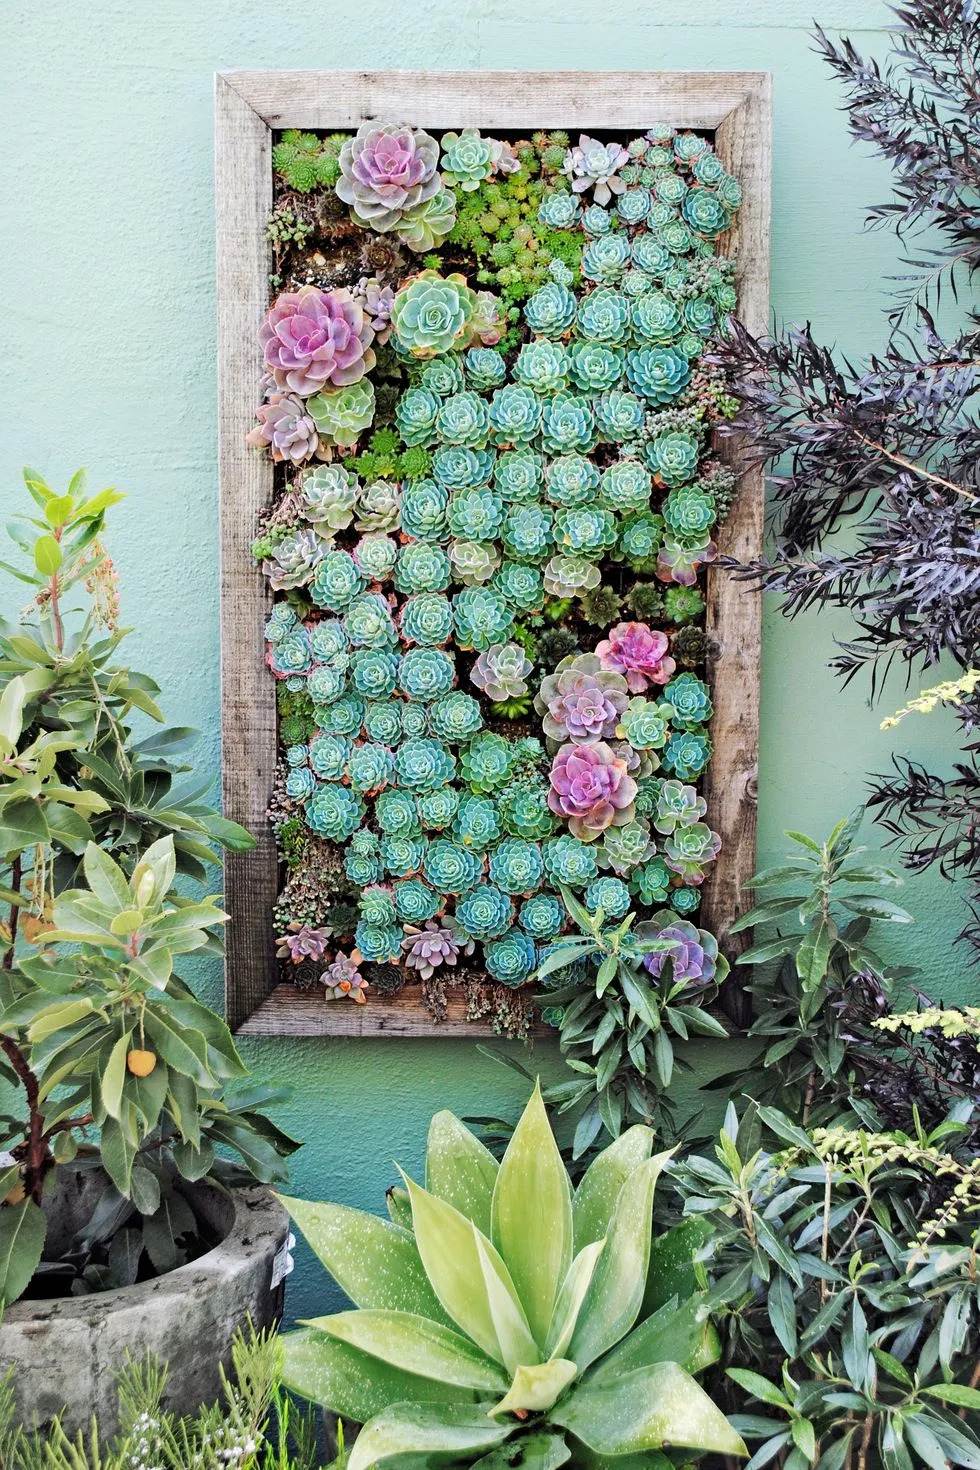 32 Wall Garden Planter Ideas For Vertical Gardening - 233